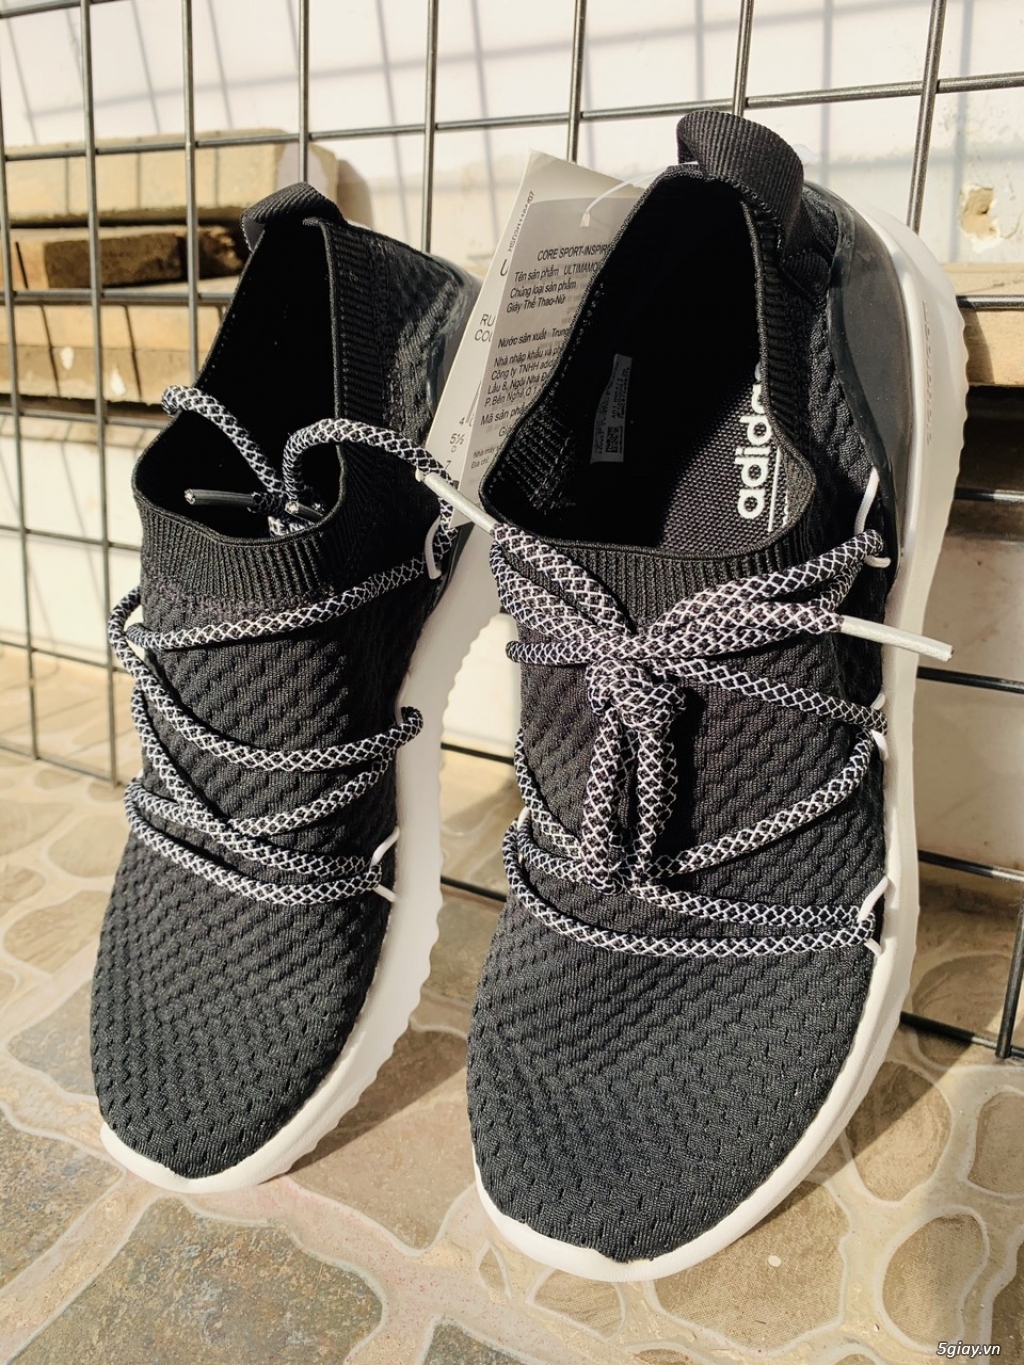 Cần bán giày Adidas Ultimamotion size 38 2/3